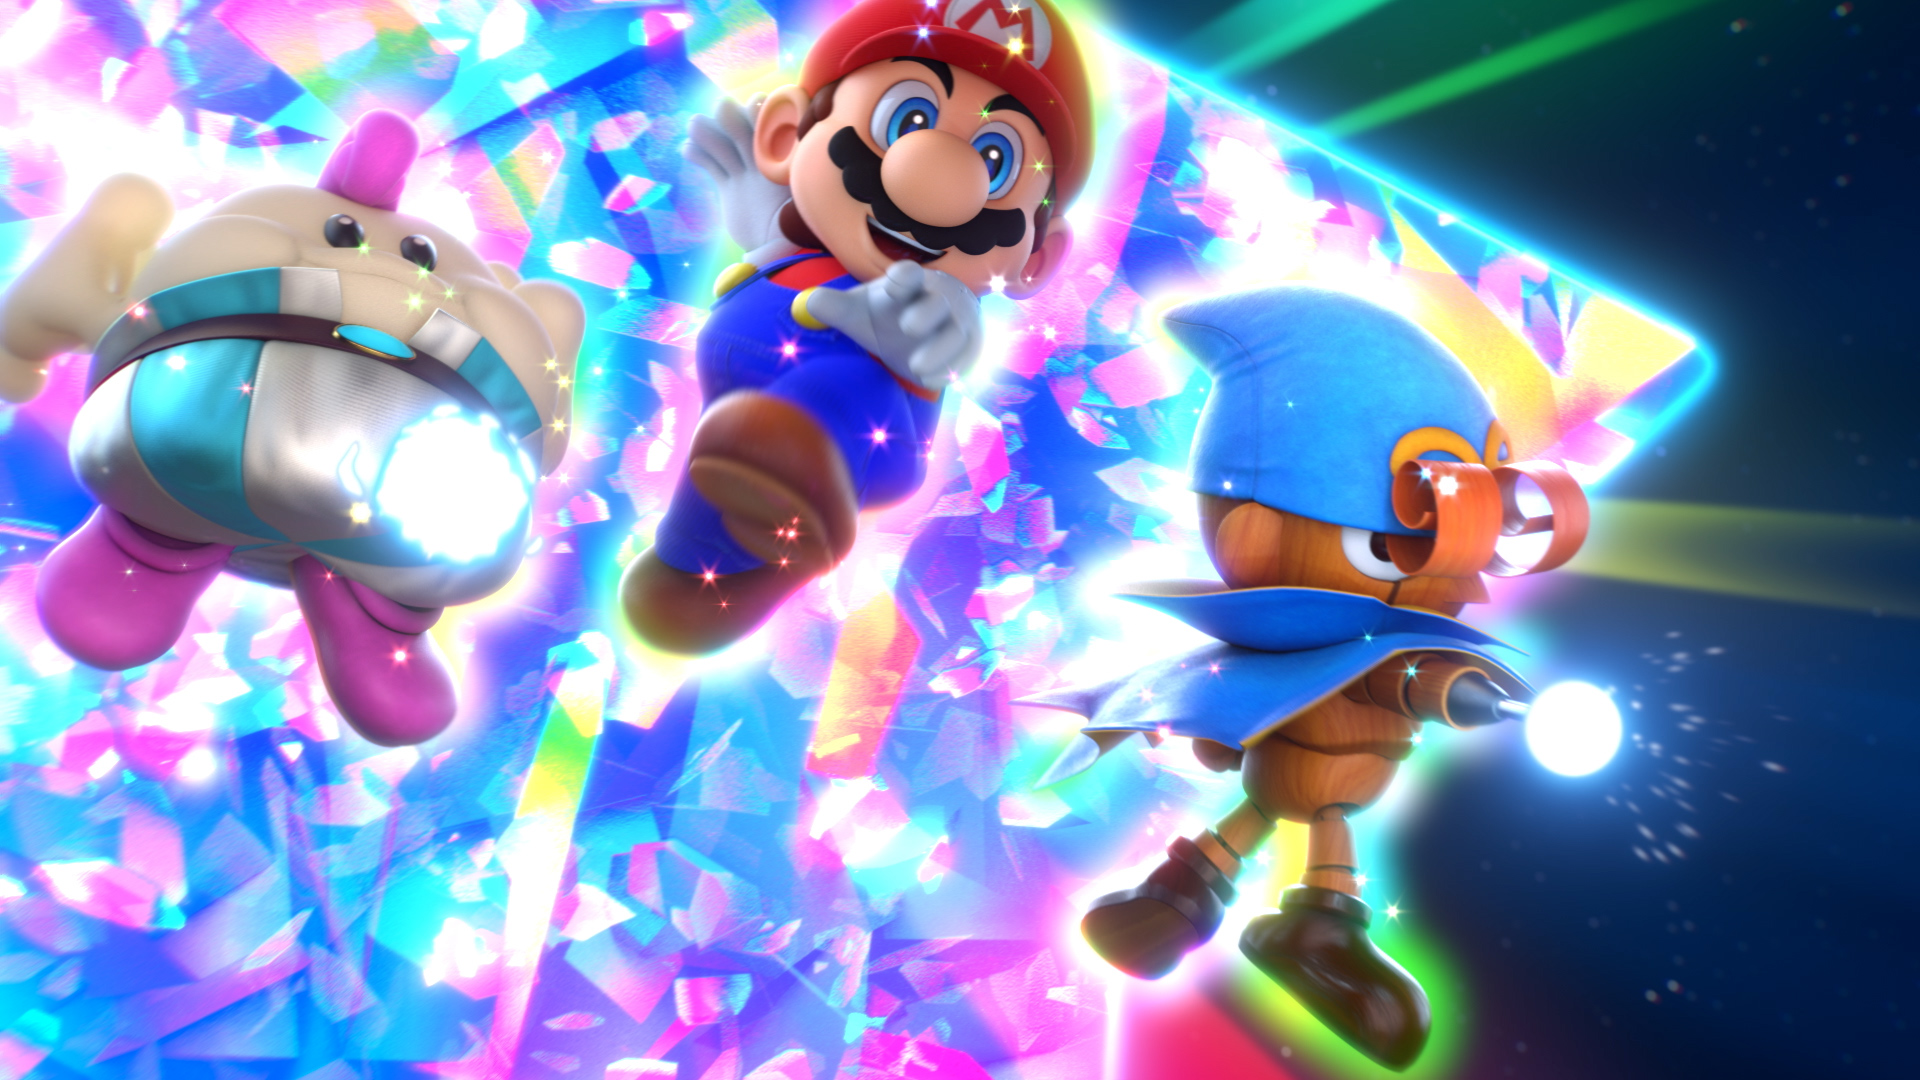 Review: 'Super Mario RPG' updates its turn-based formula just enough : NPR